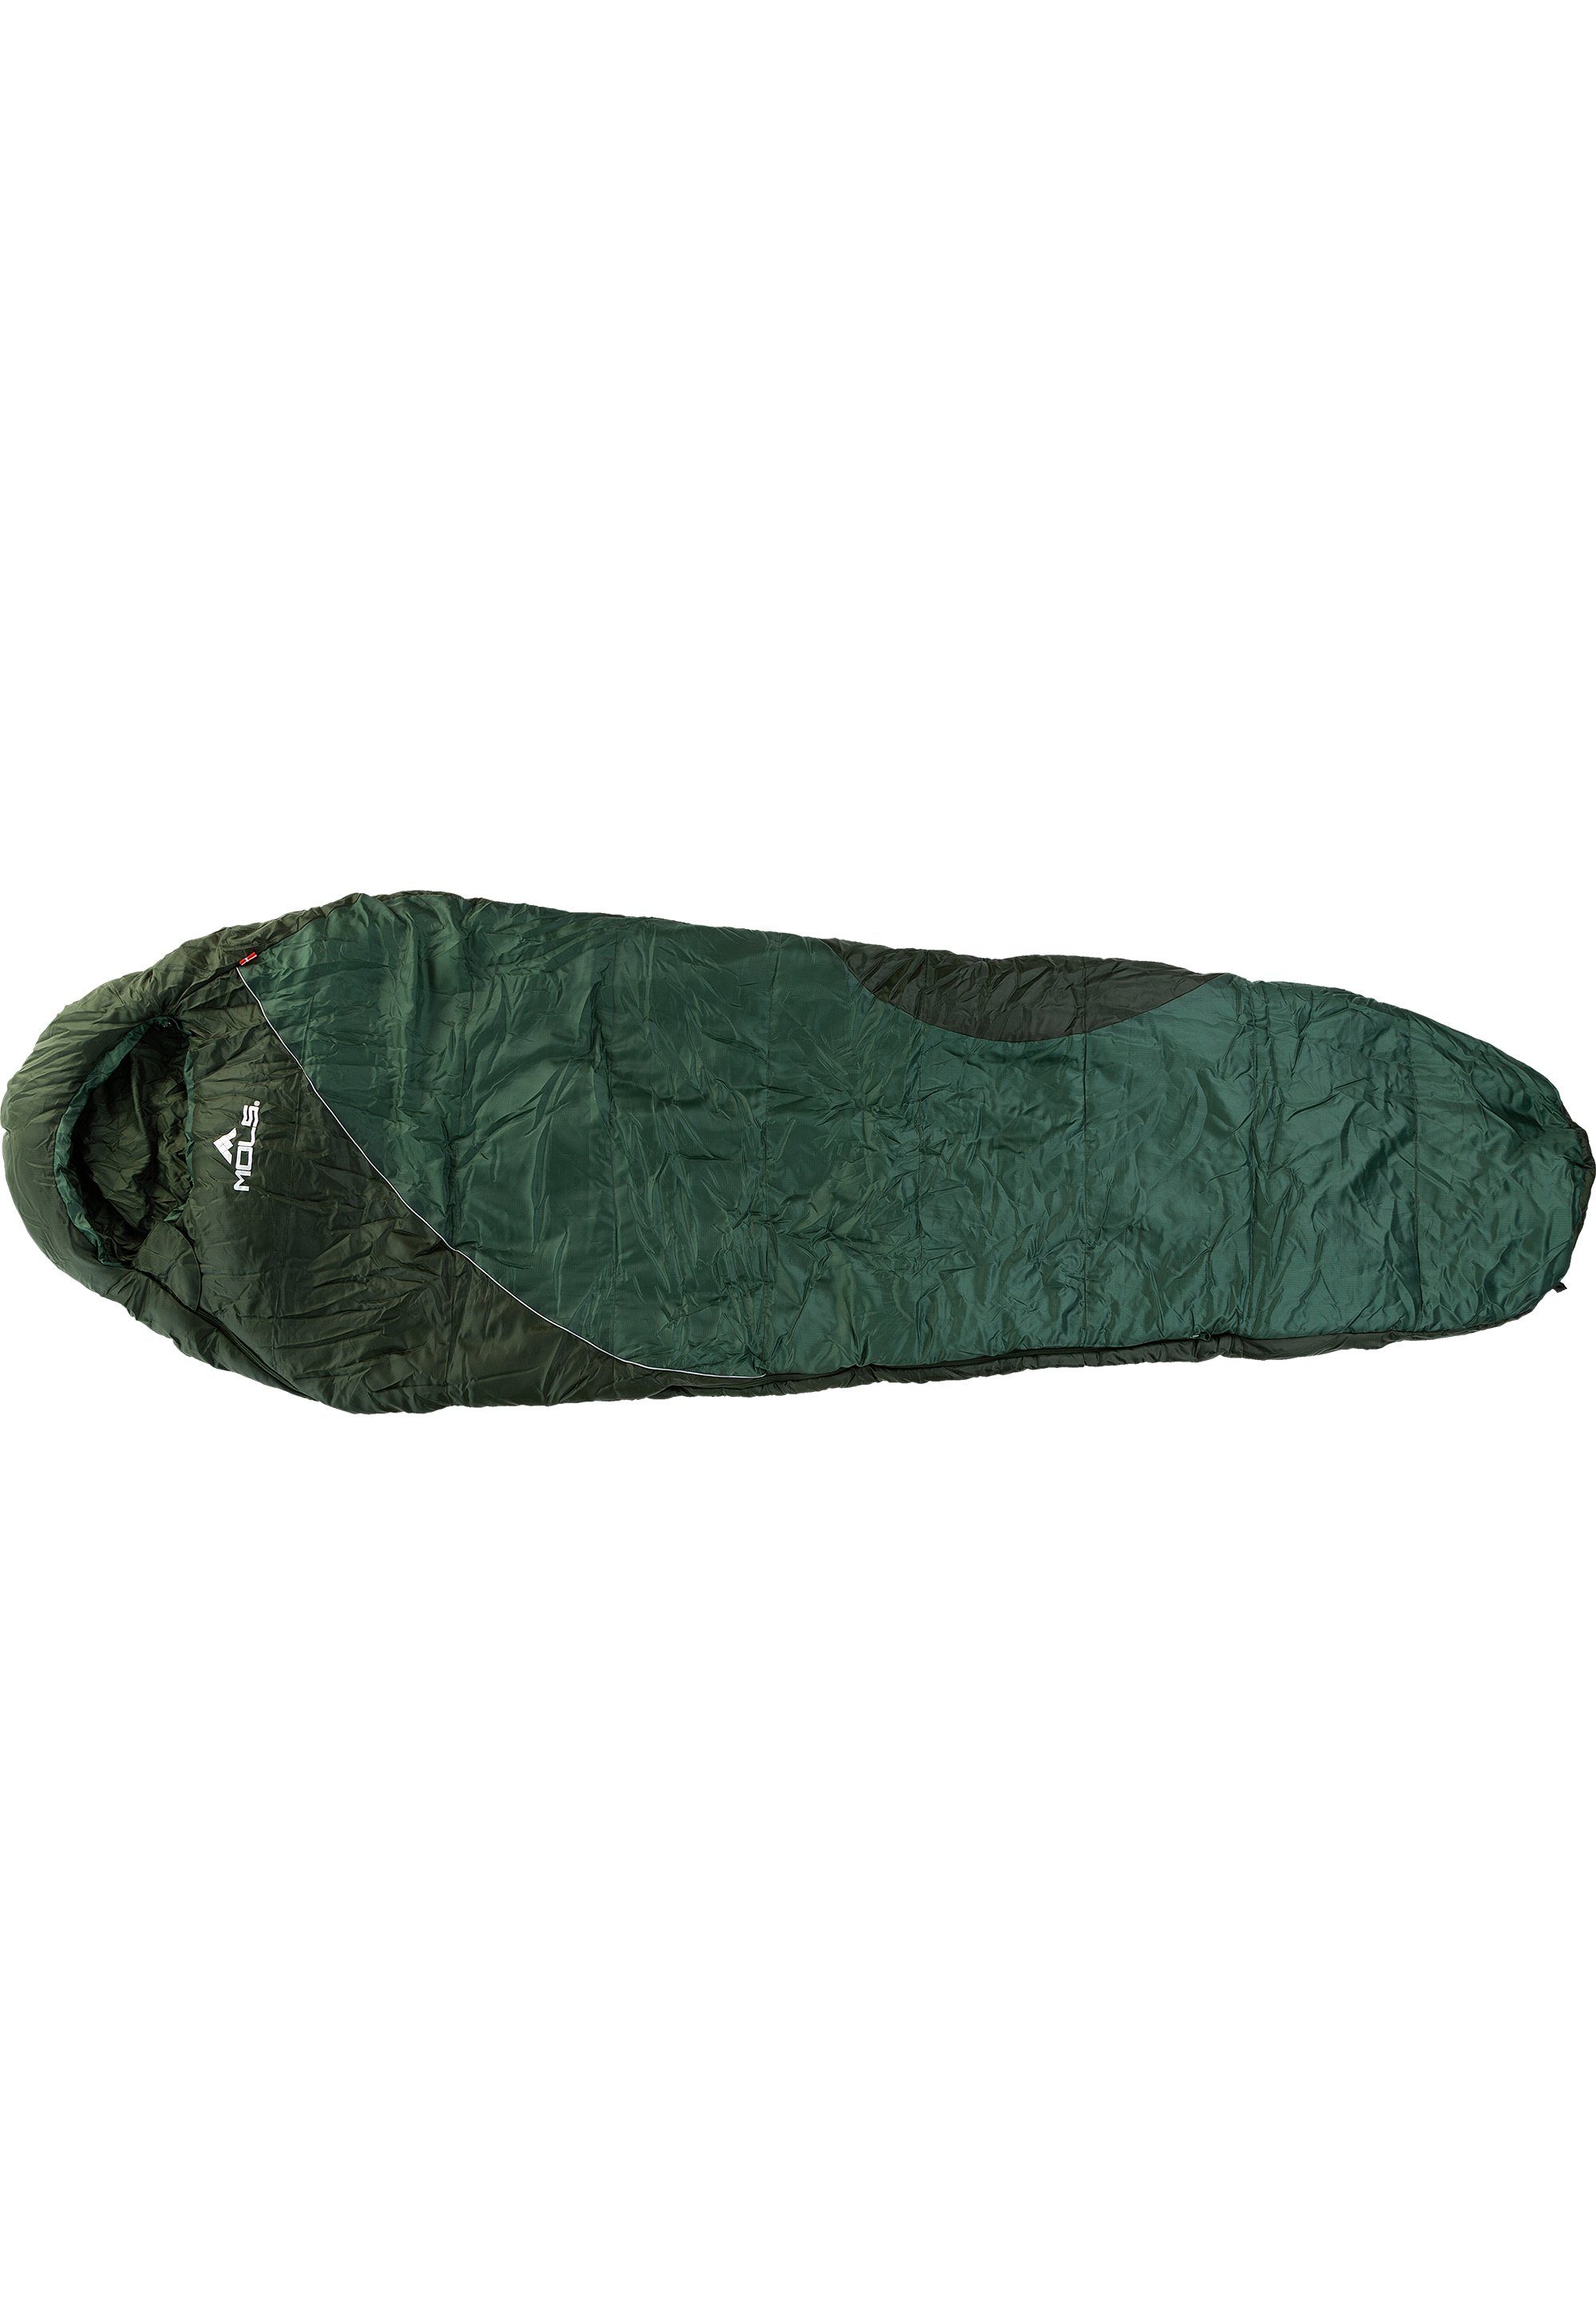 MOLS Trekkingschlafsack Dogon, hochwertigem mit YKK-Reißverschluss